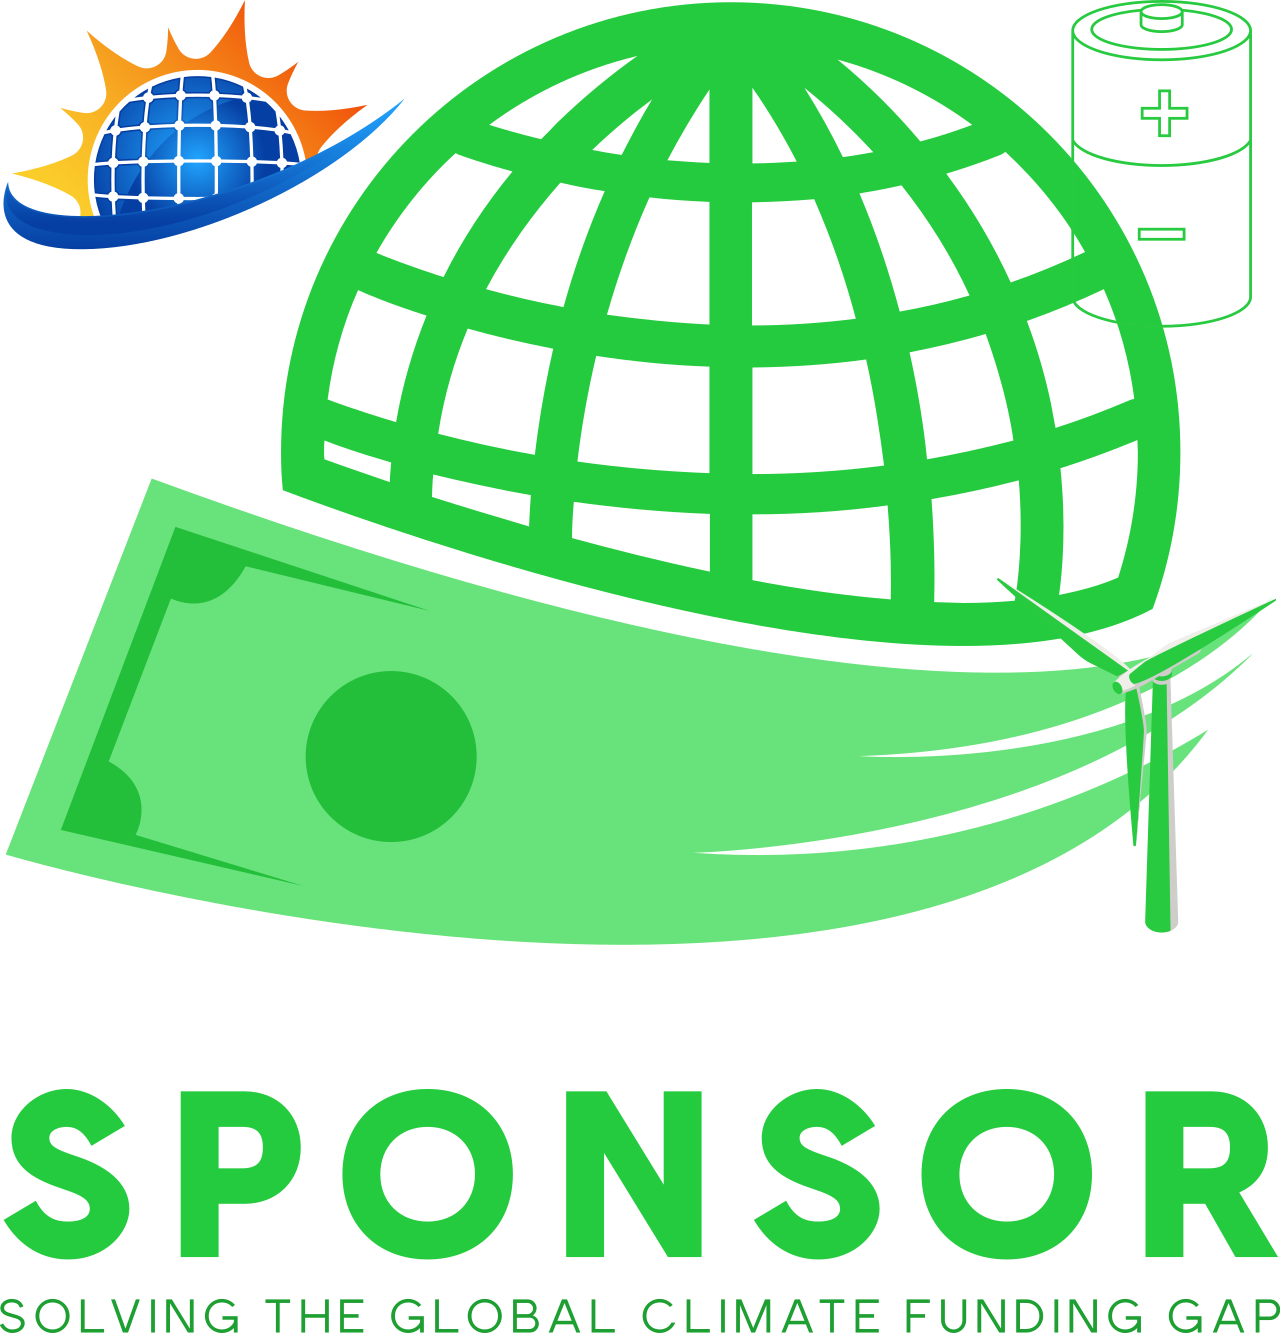 Sponsor's logo